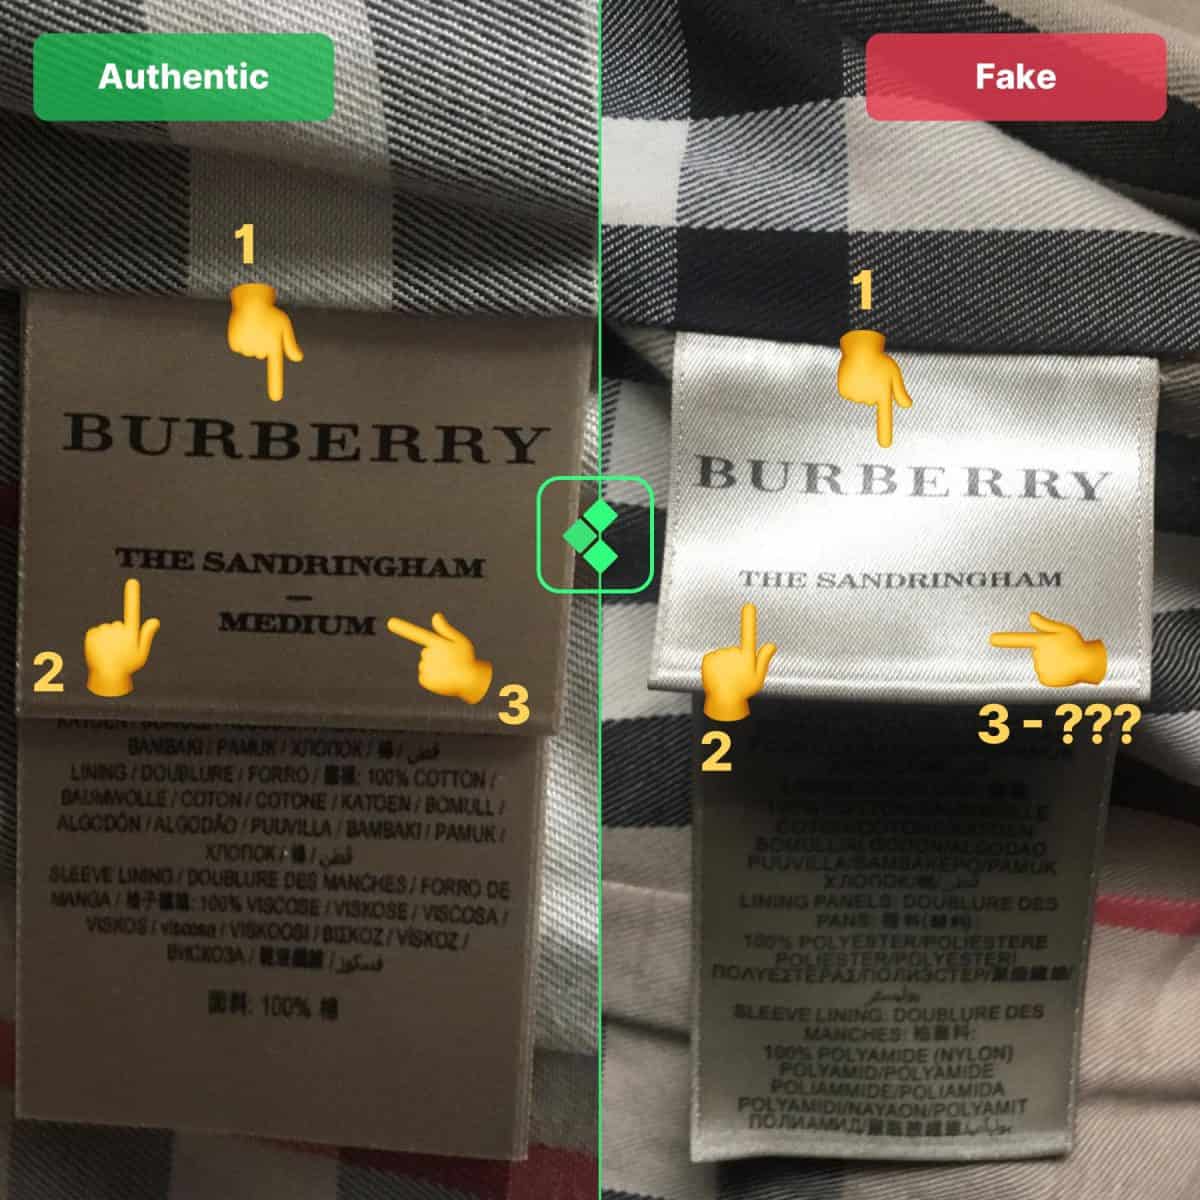 fake vs real burberry coats